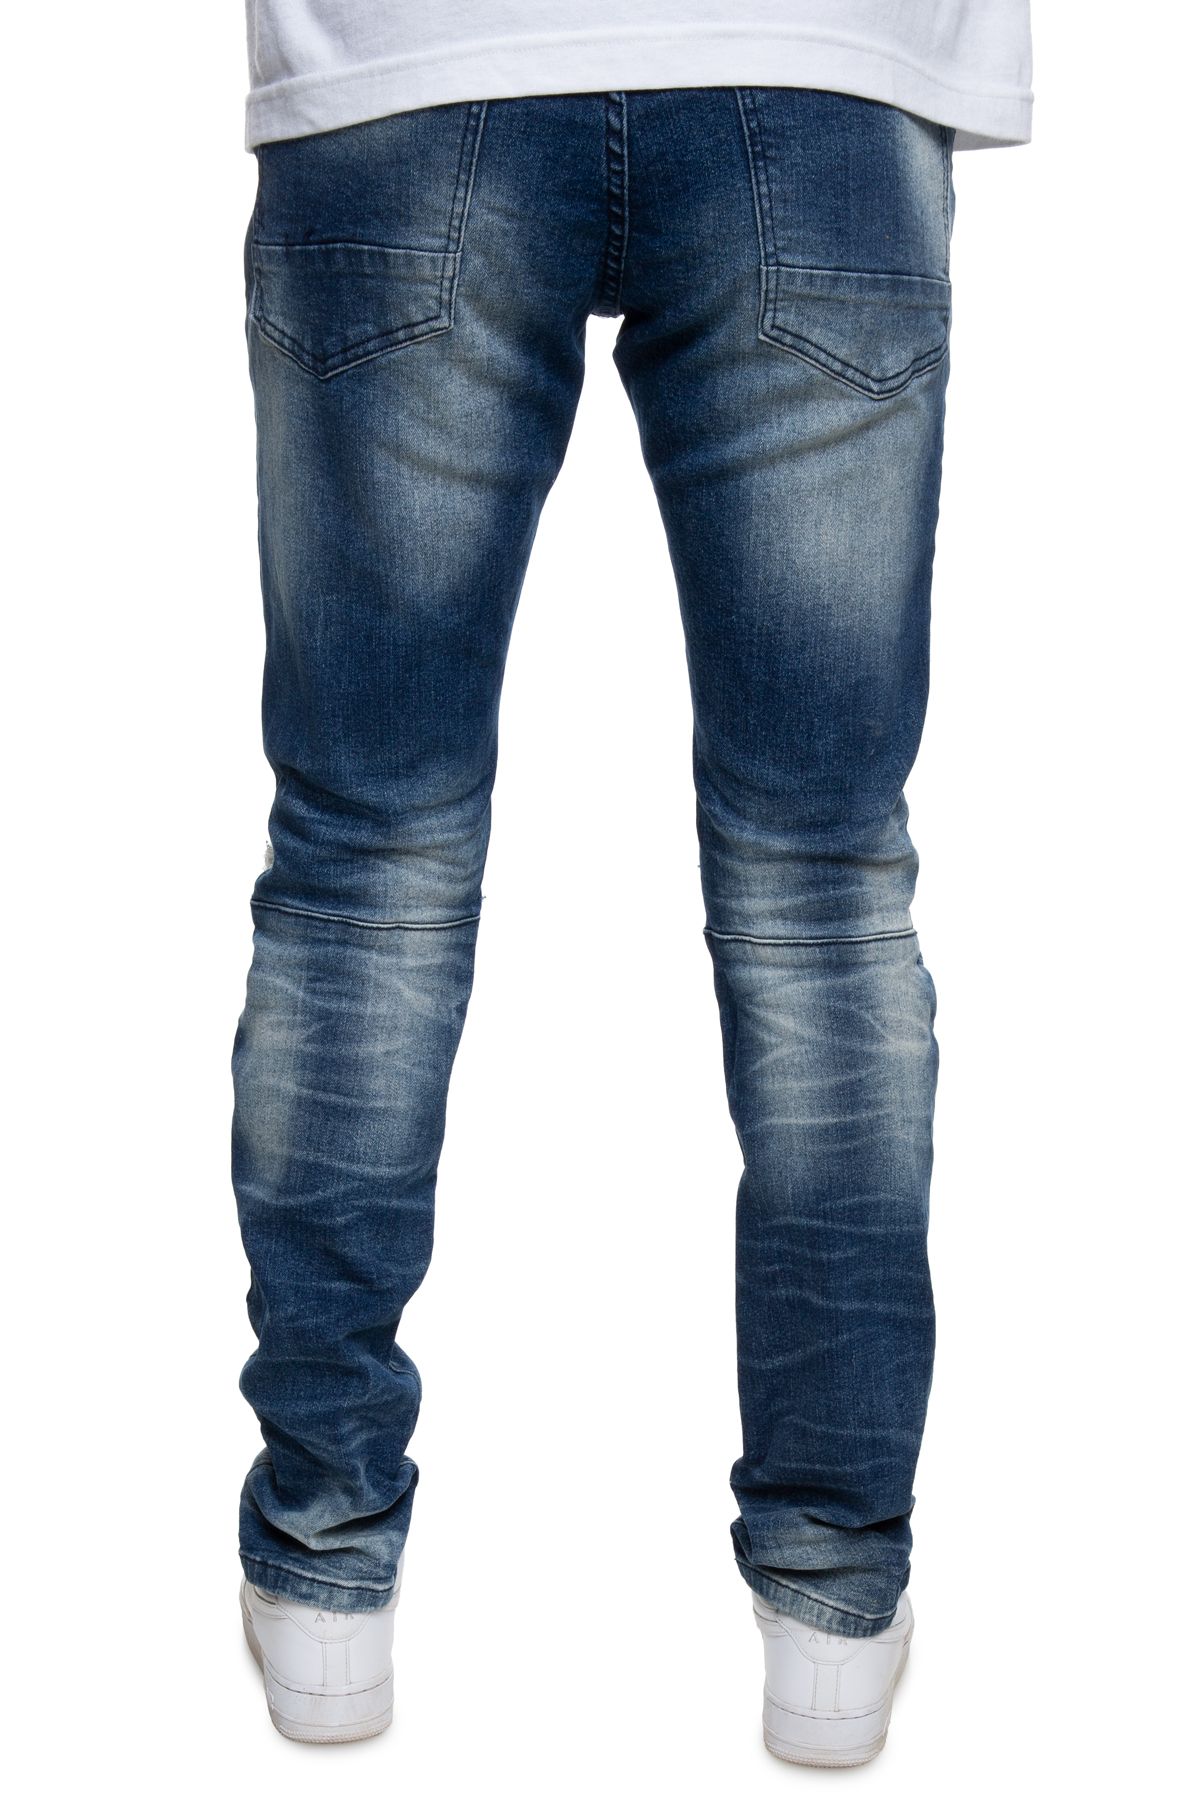 FBRK Greyson Jeans JP9940-MARLBL - Shiekh